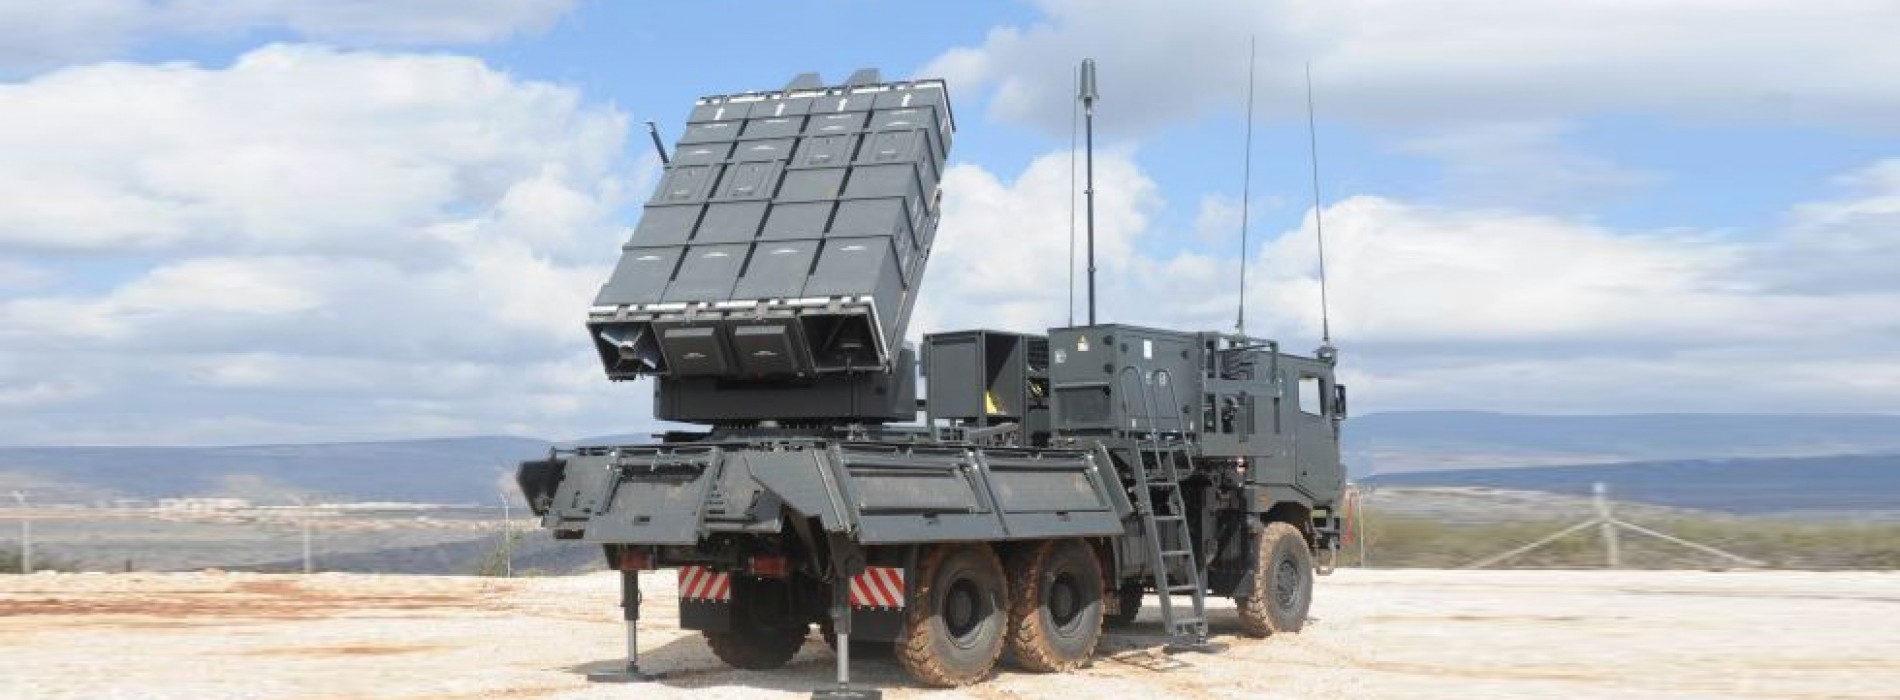 India prepares Israeli SPYDER air defence missile system for Pakistan border